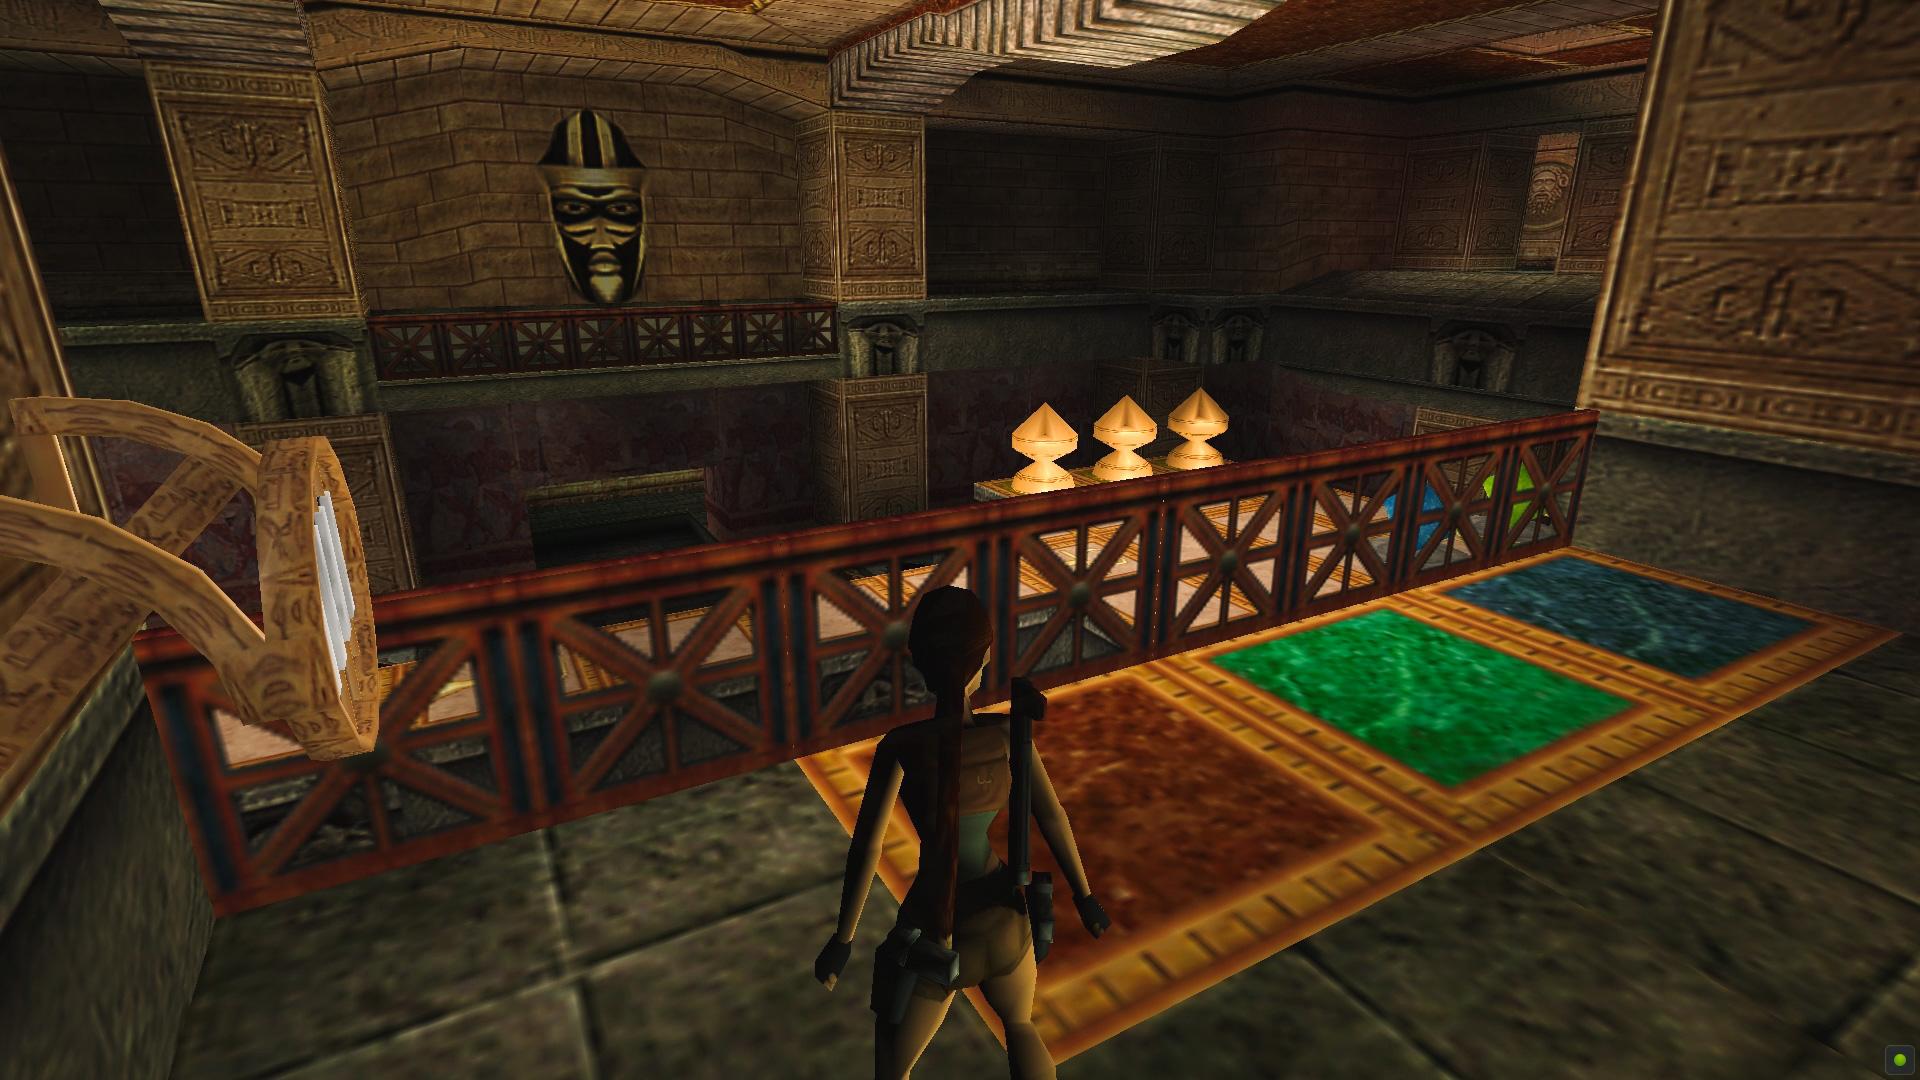 Lara Croft looking at a Senet board in Tomb Raider IV: The Last Revelation.